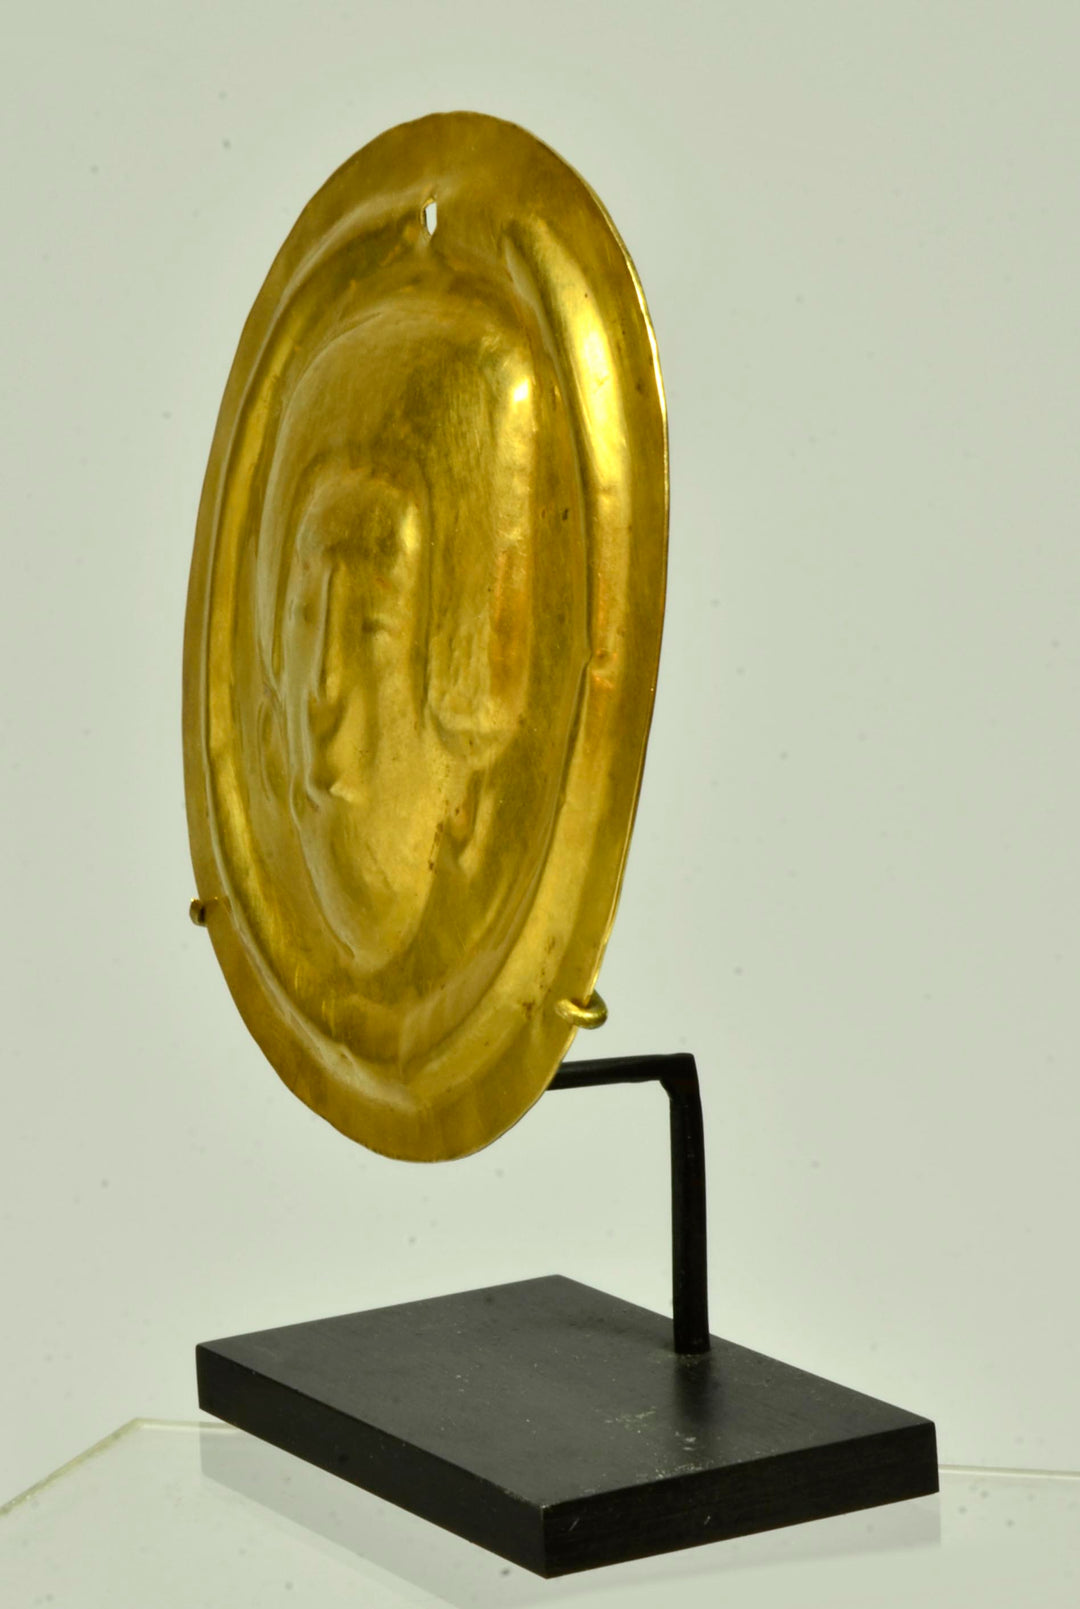 Narino Gold Circular Disc Depicting a Coca Chewer